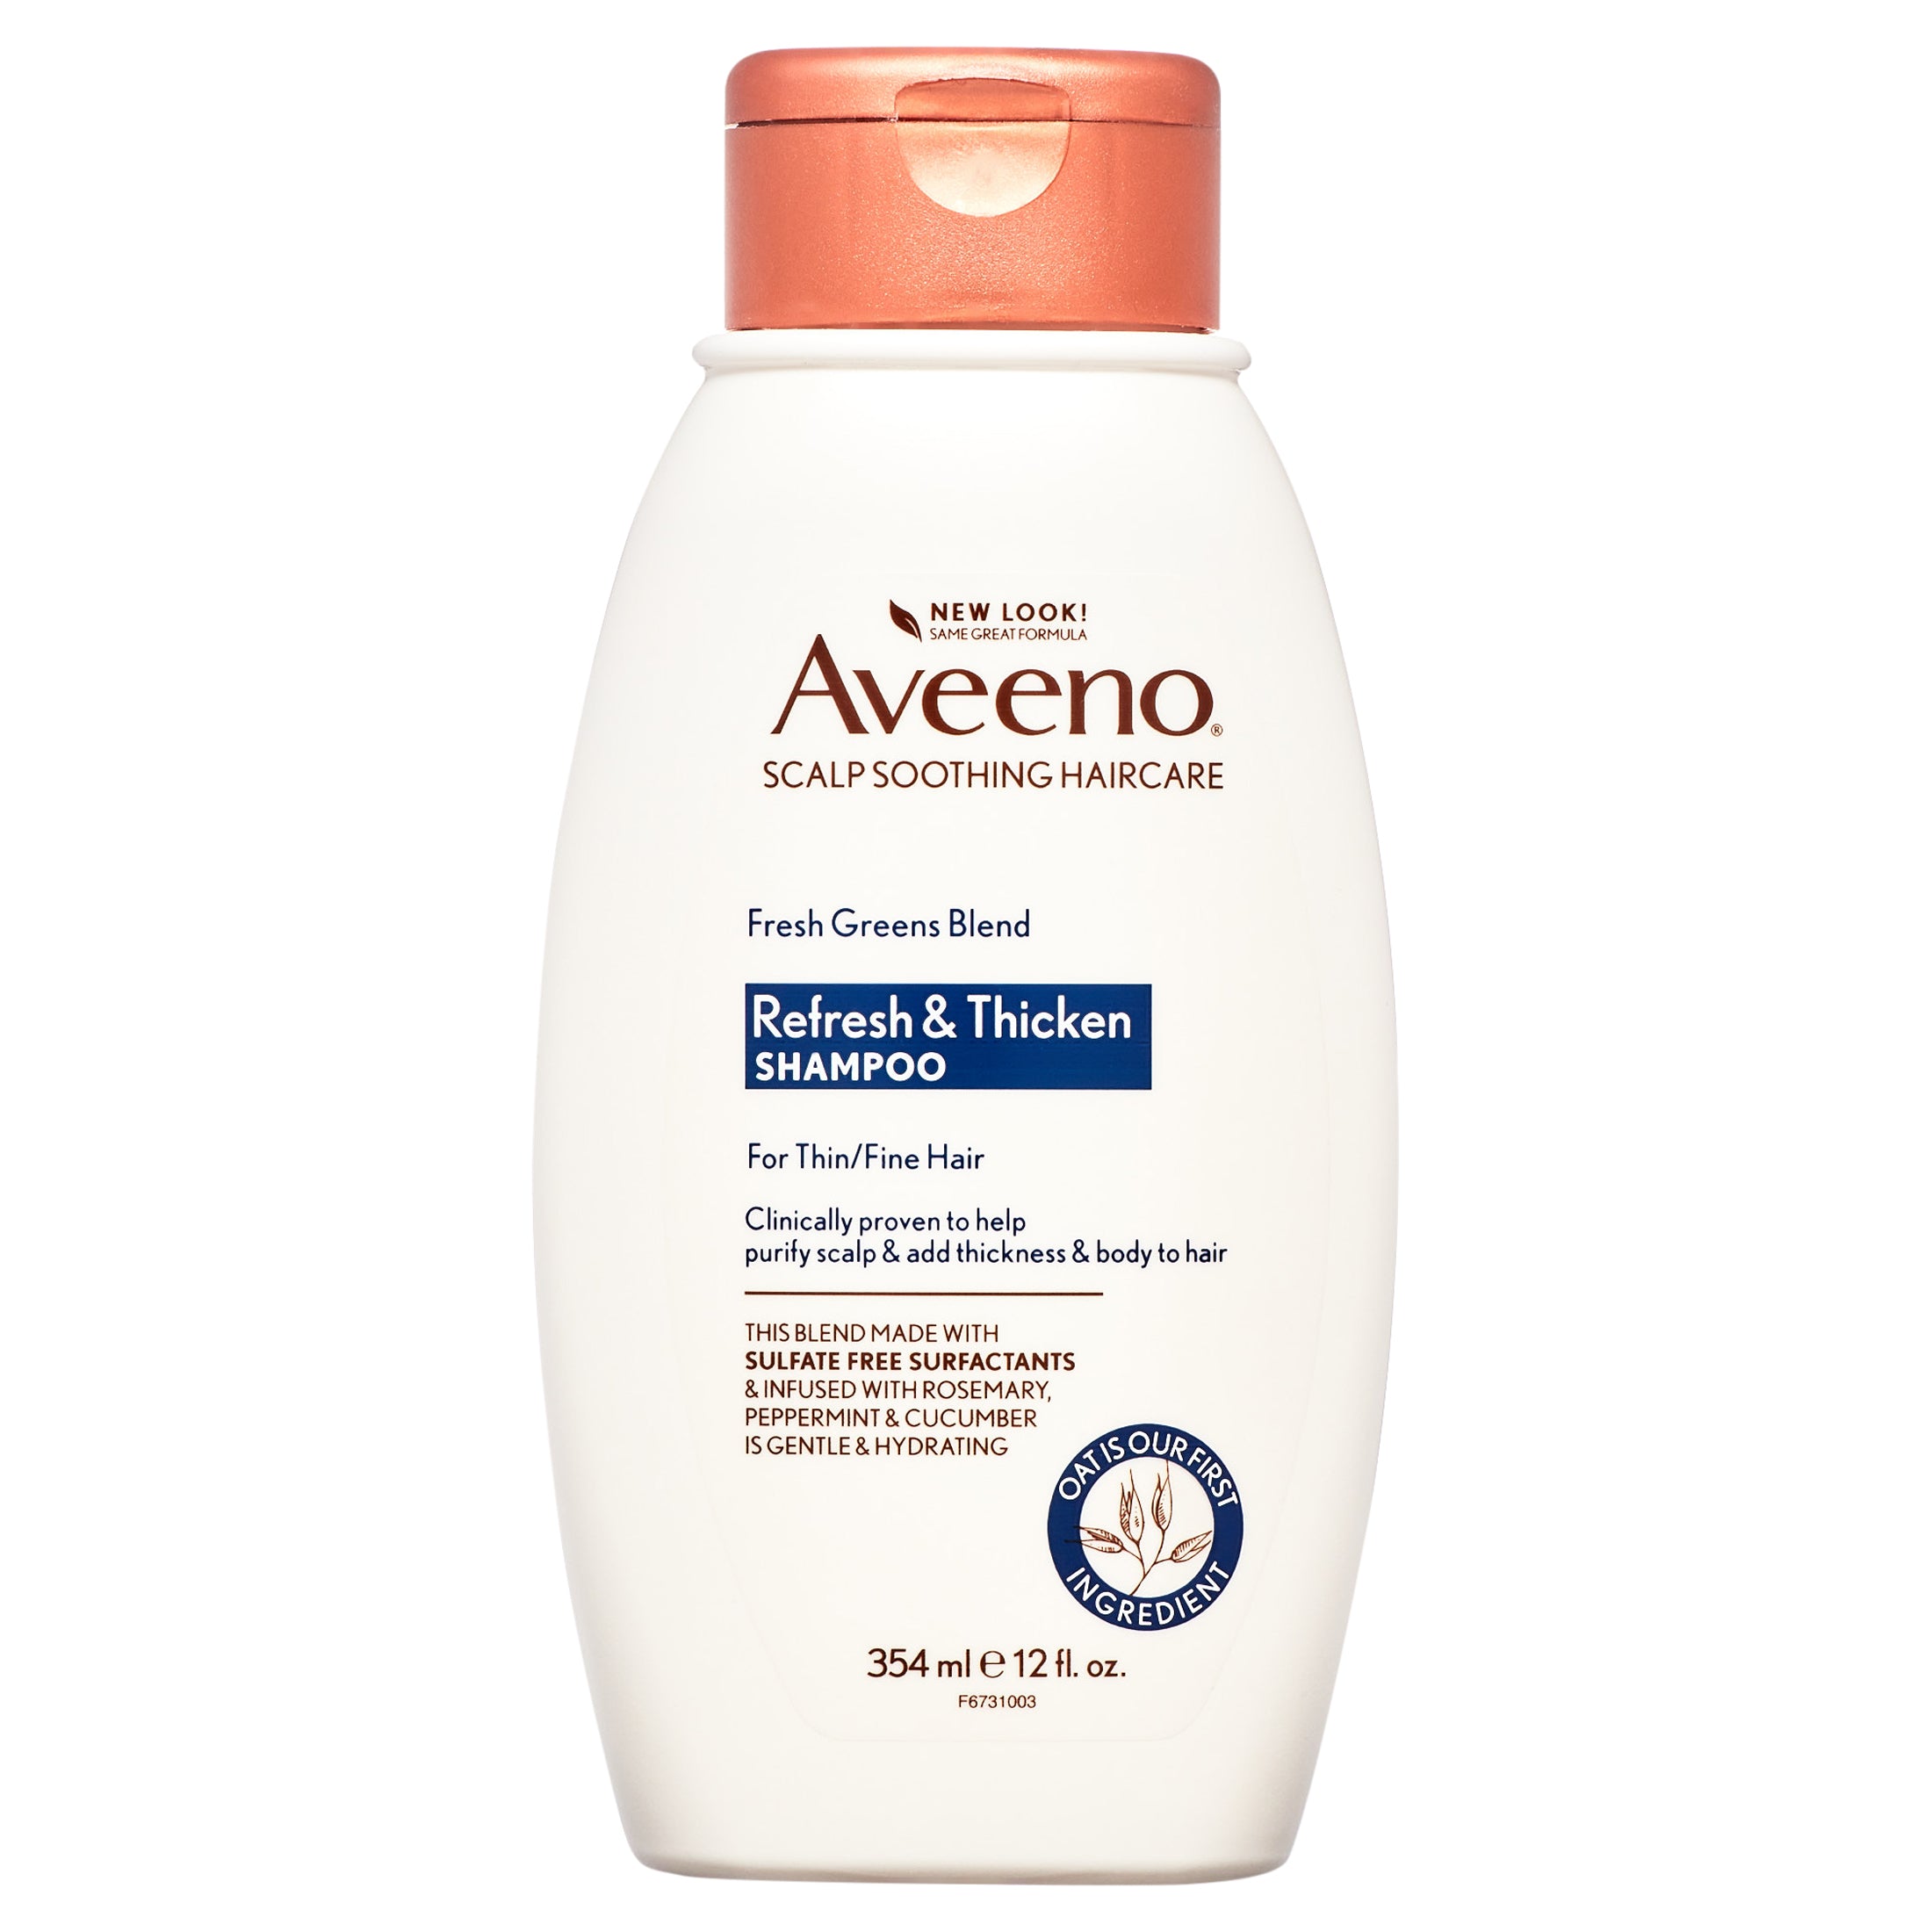 Aveeno Fresh Greens Blend Natural Volumizing Shampoo, Cucumber, Rosemary, for Fine Hair, 12 fl oz | MTTS365